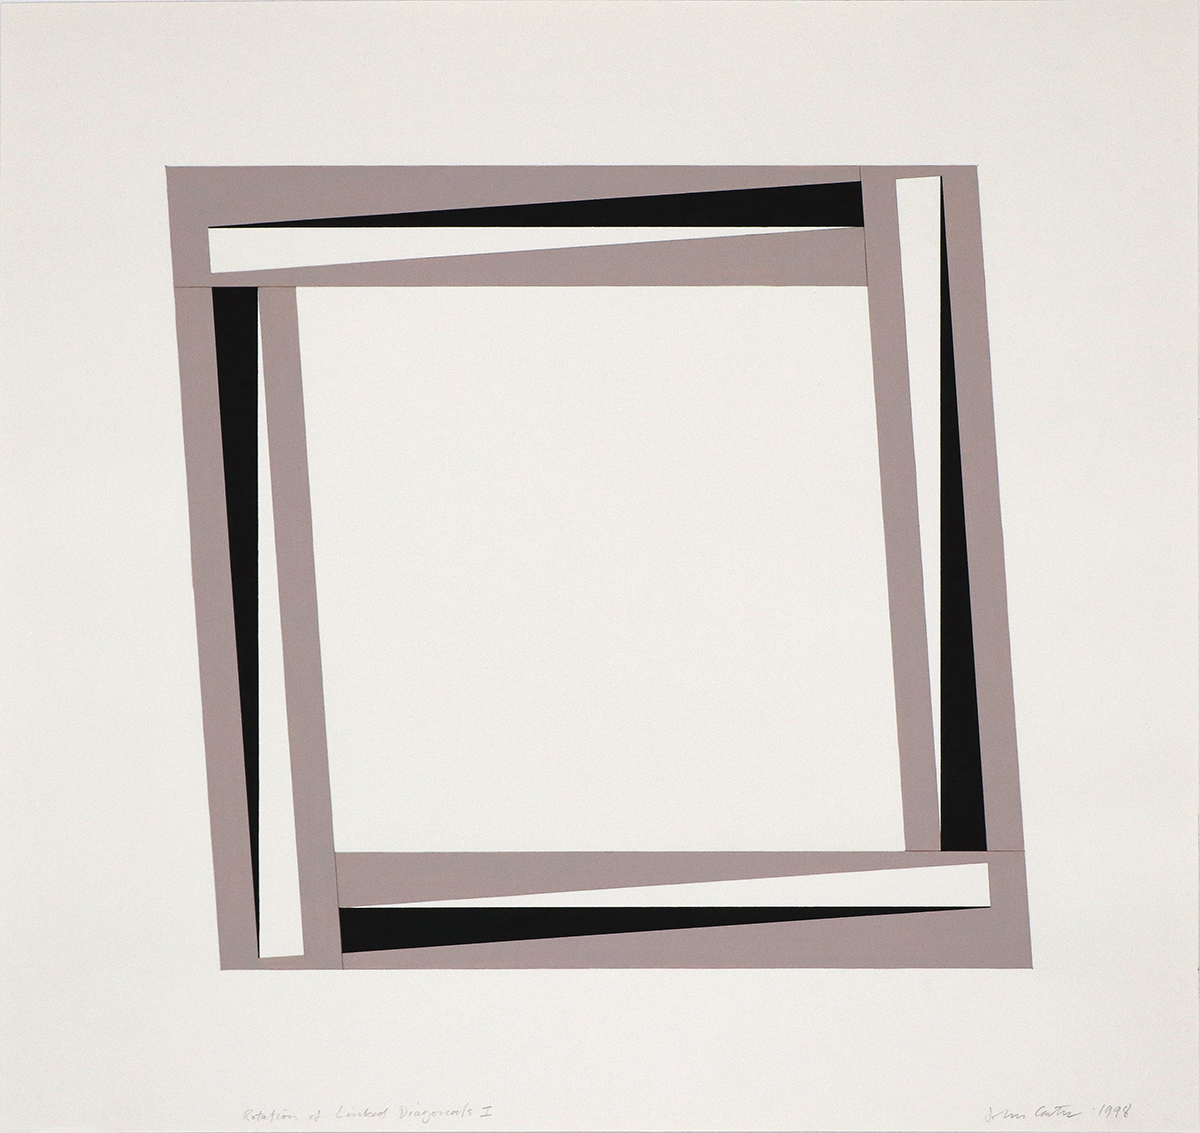 Rotation of Linked Diagonals I, 199850,5 x 53,3 cmGouache auf Papier